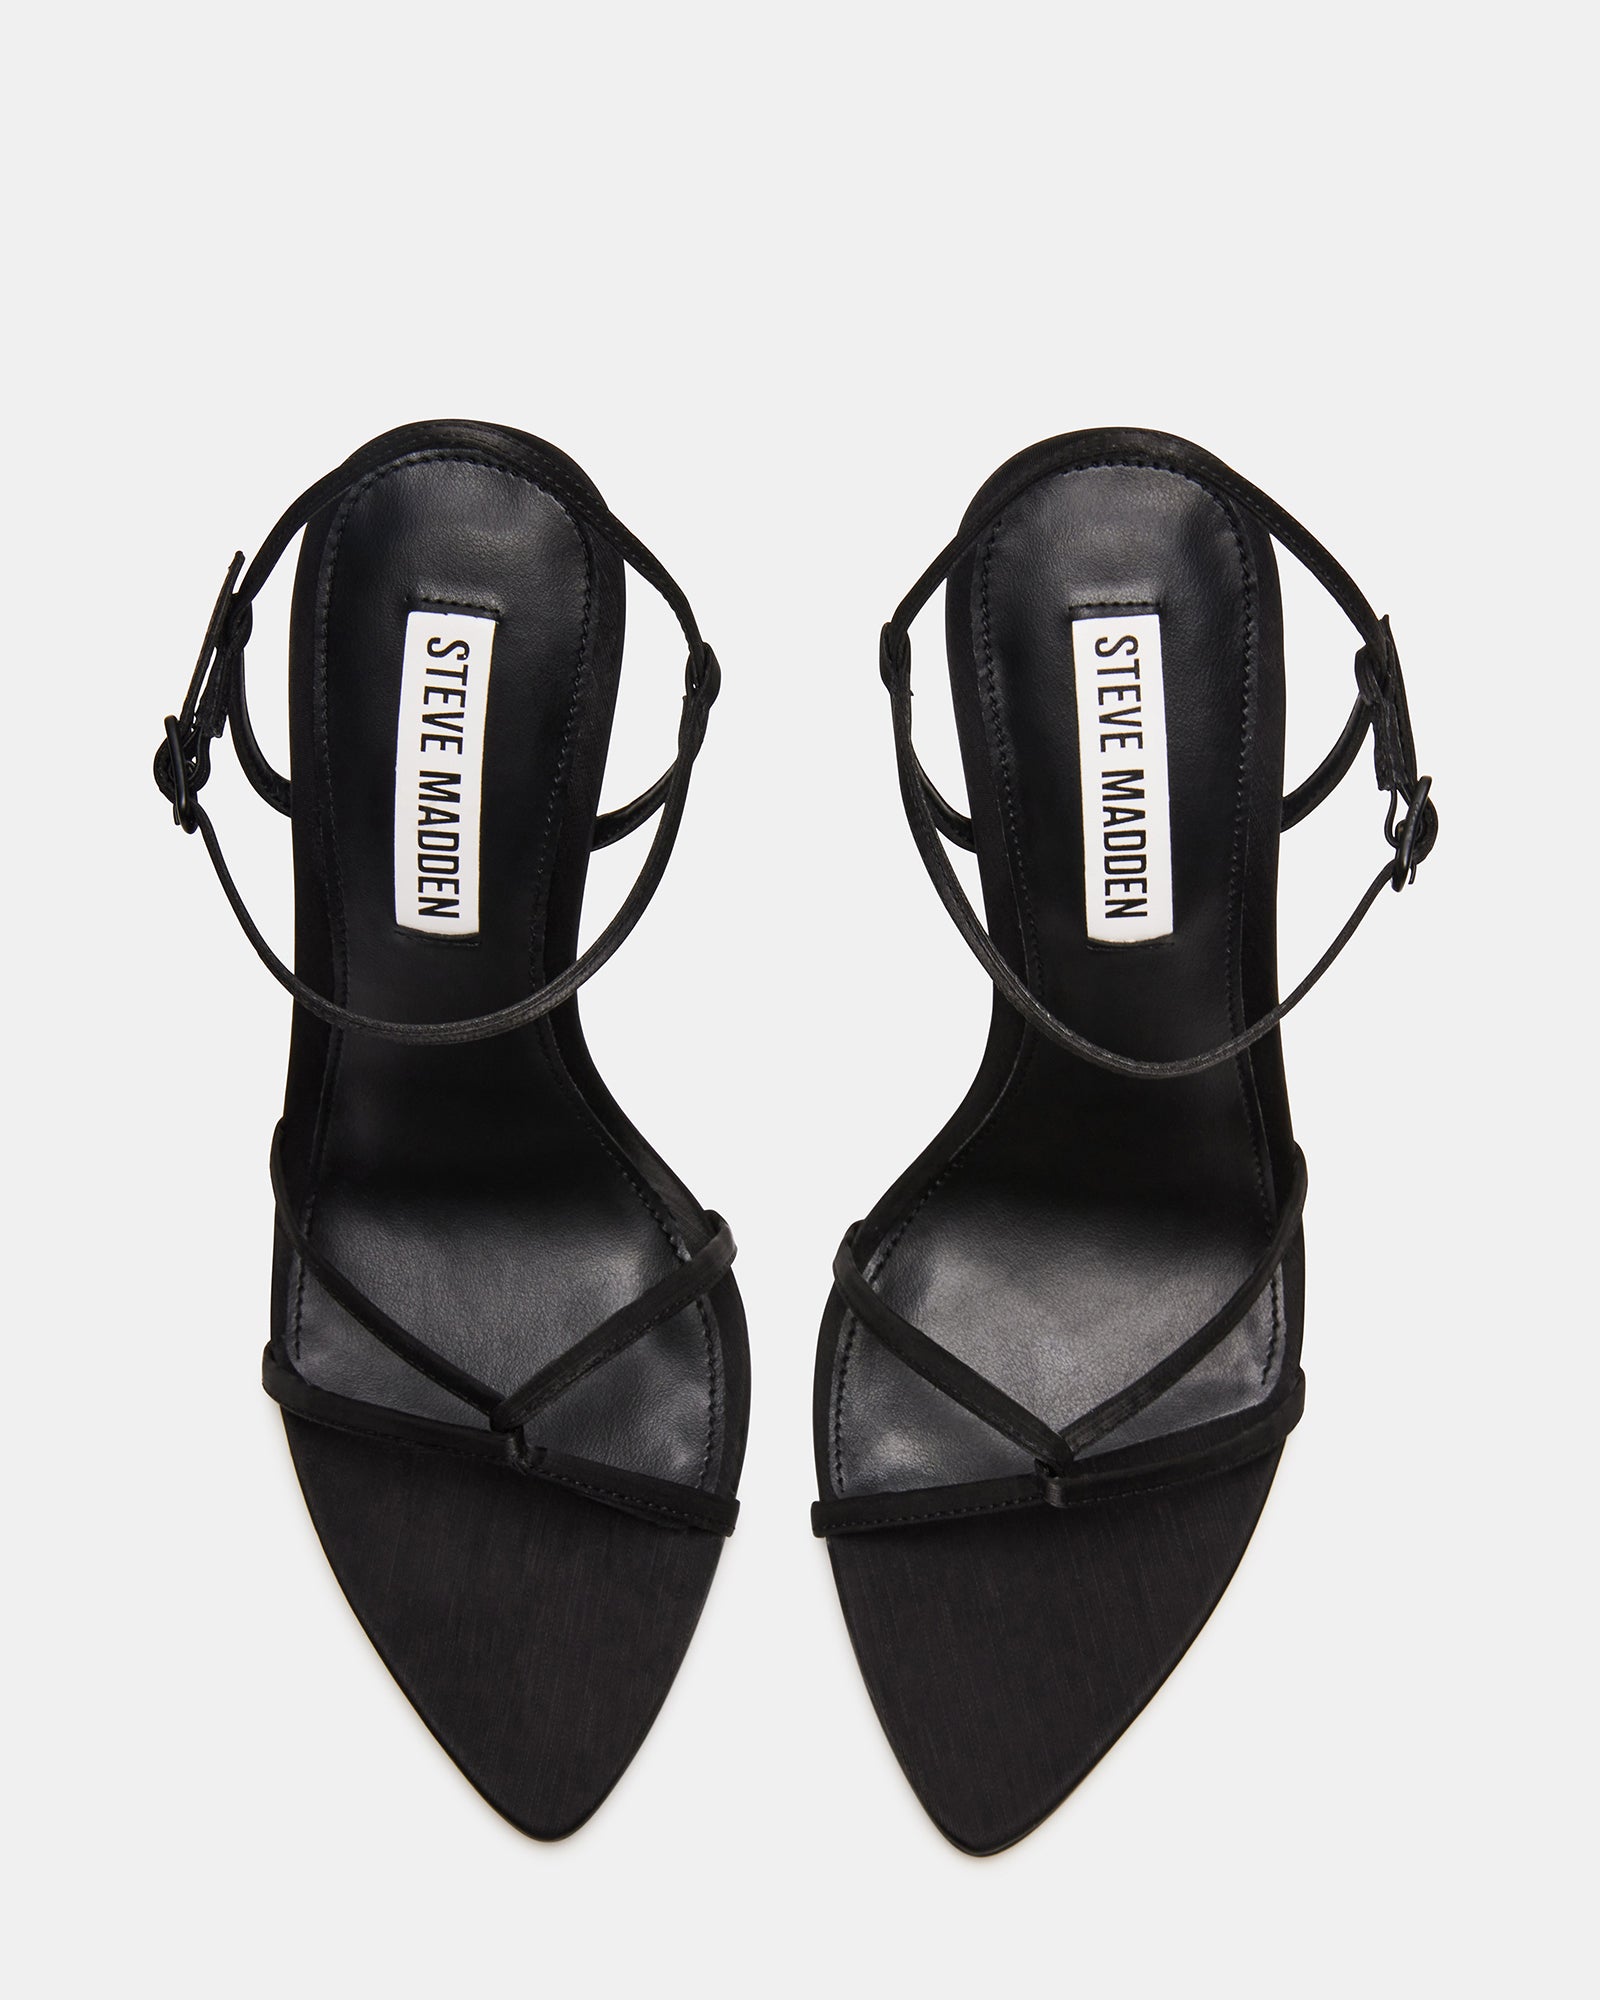 STELLINA Black Satin Dainty Strappy Pointed Toe Heel | Women's Heels ...